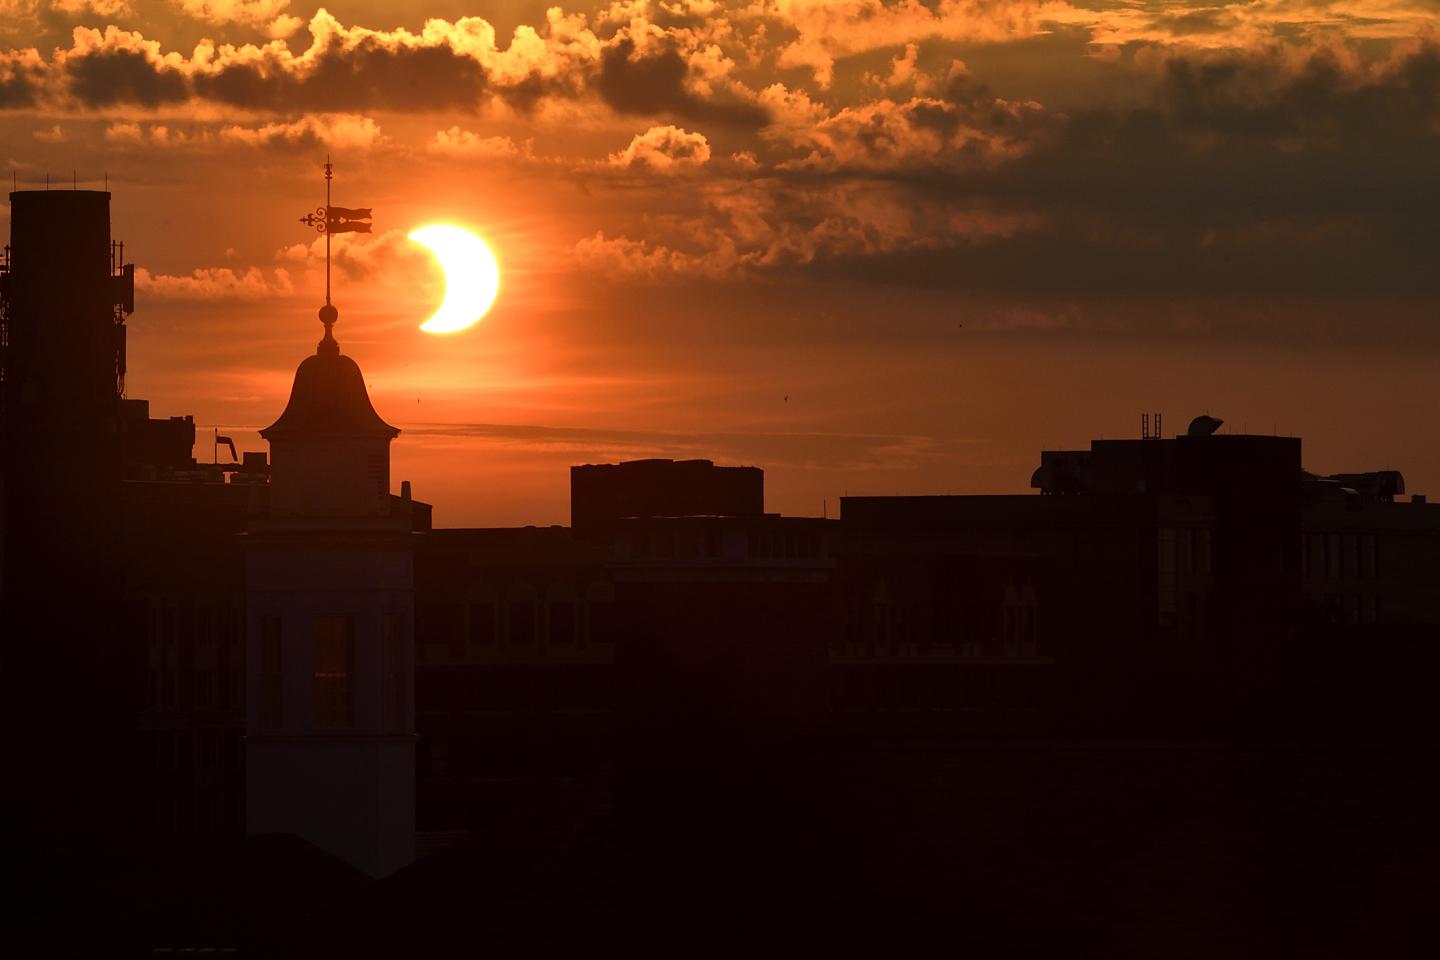 Partial solar eclipse as seen from Wyman Park Building, June 2021